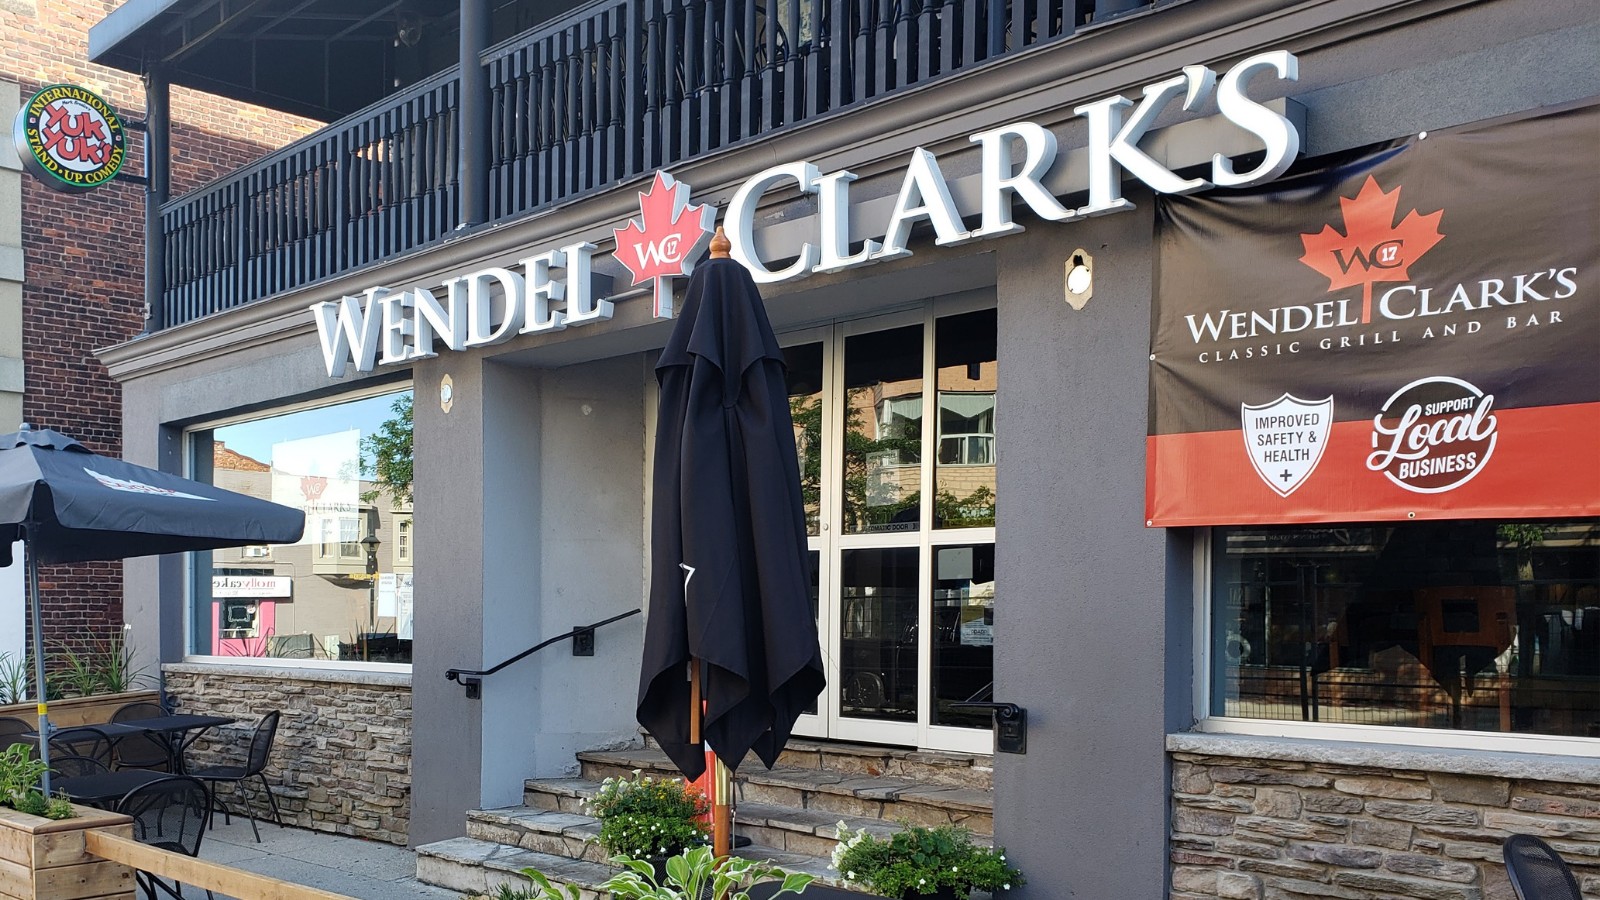 Wendel Clark restaurant chain coming to Saskatoon